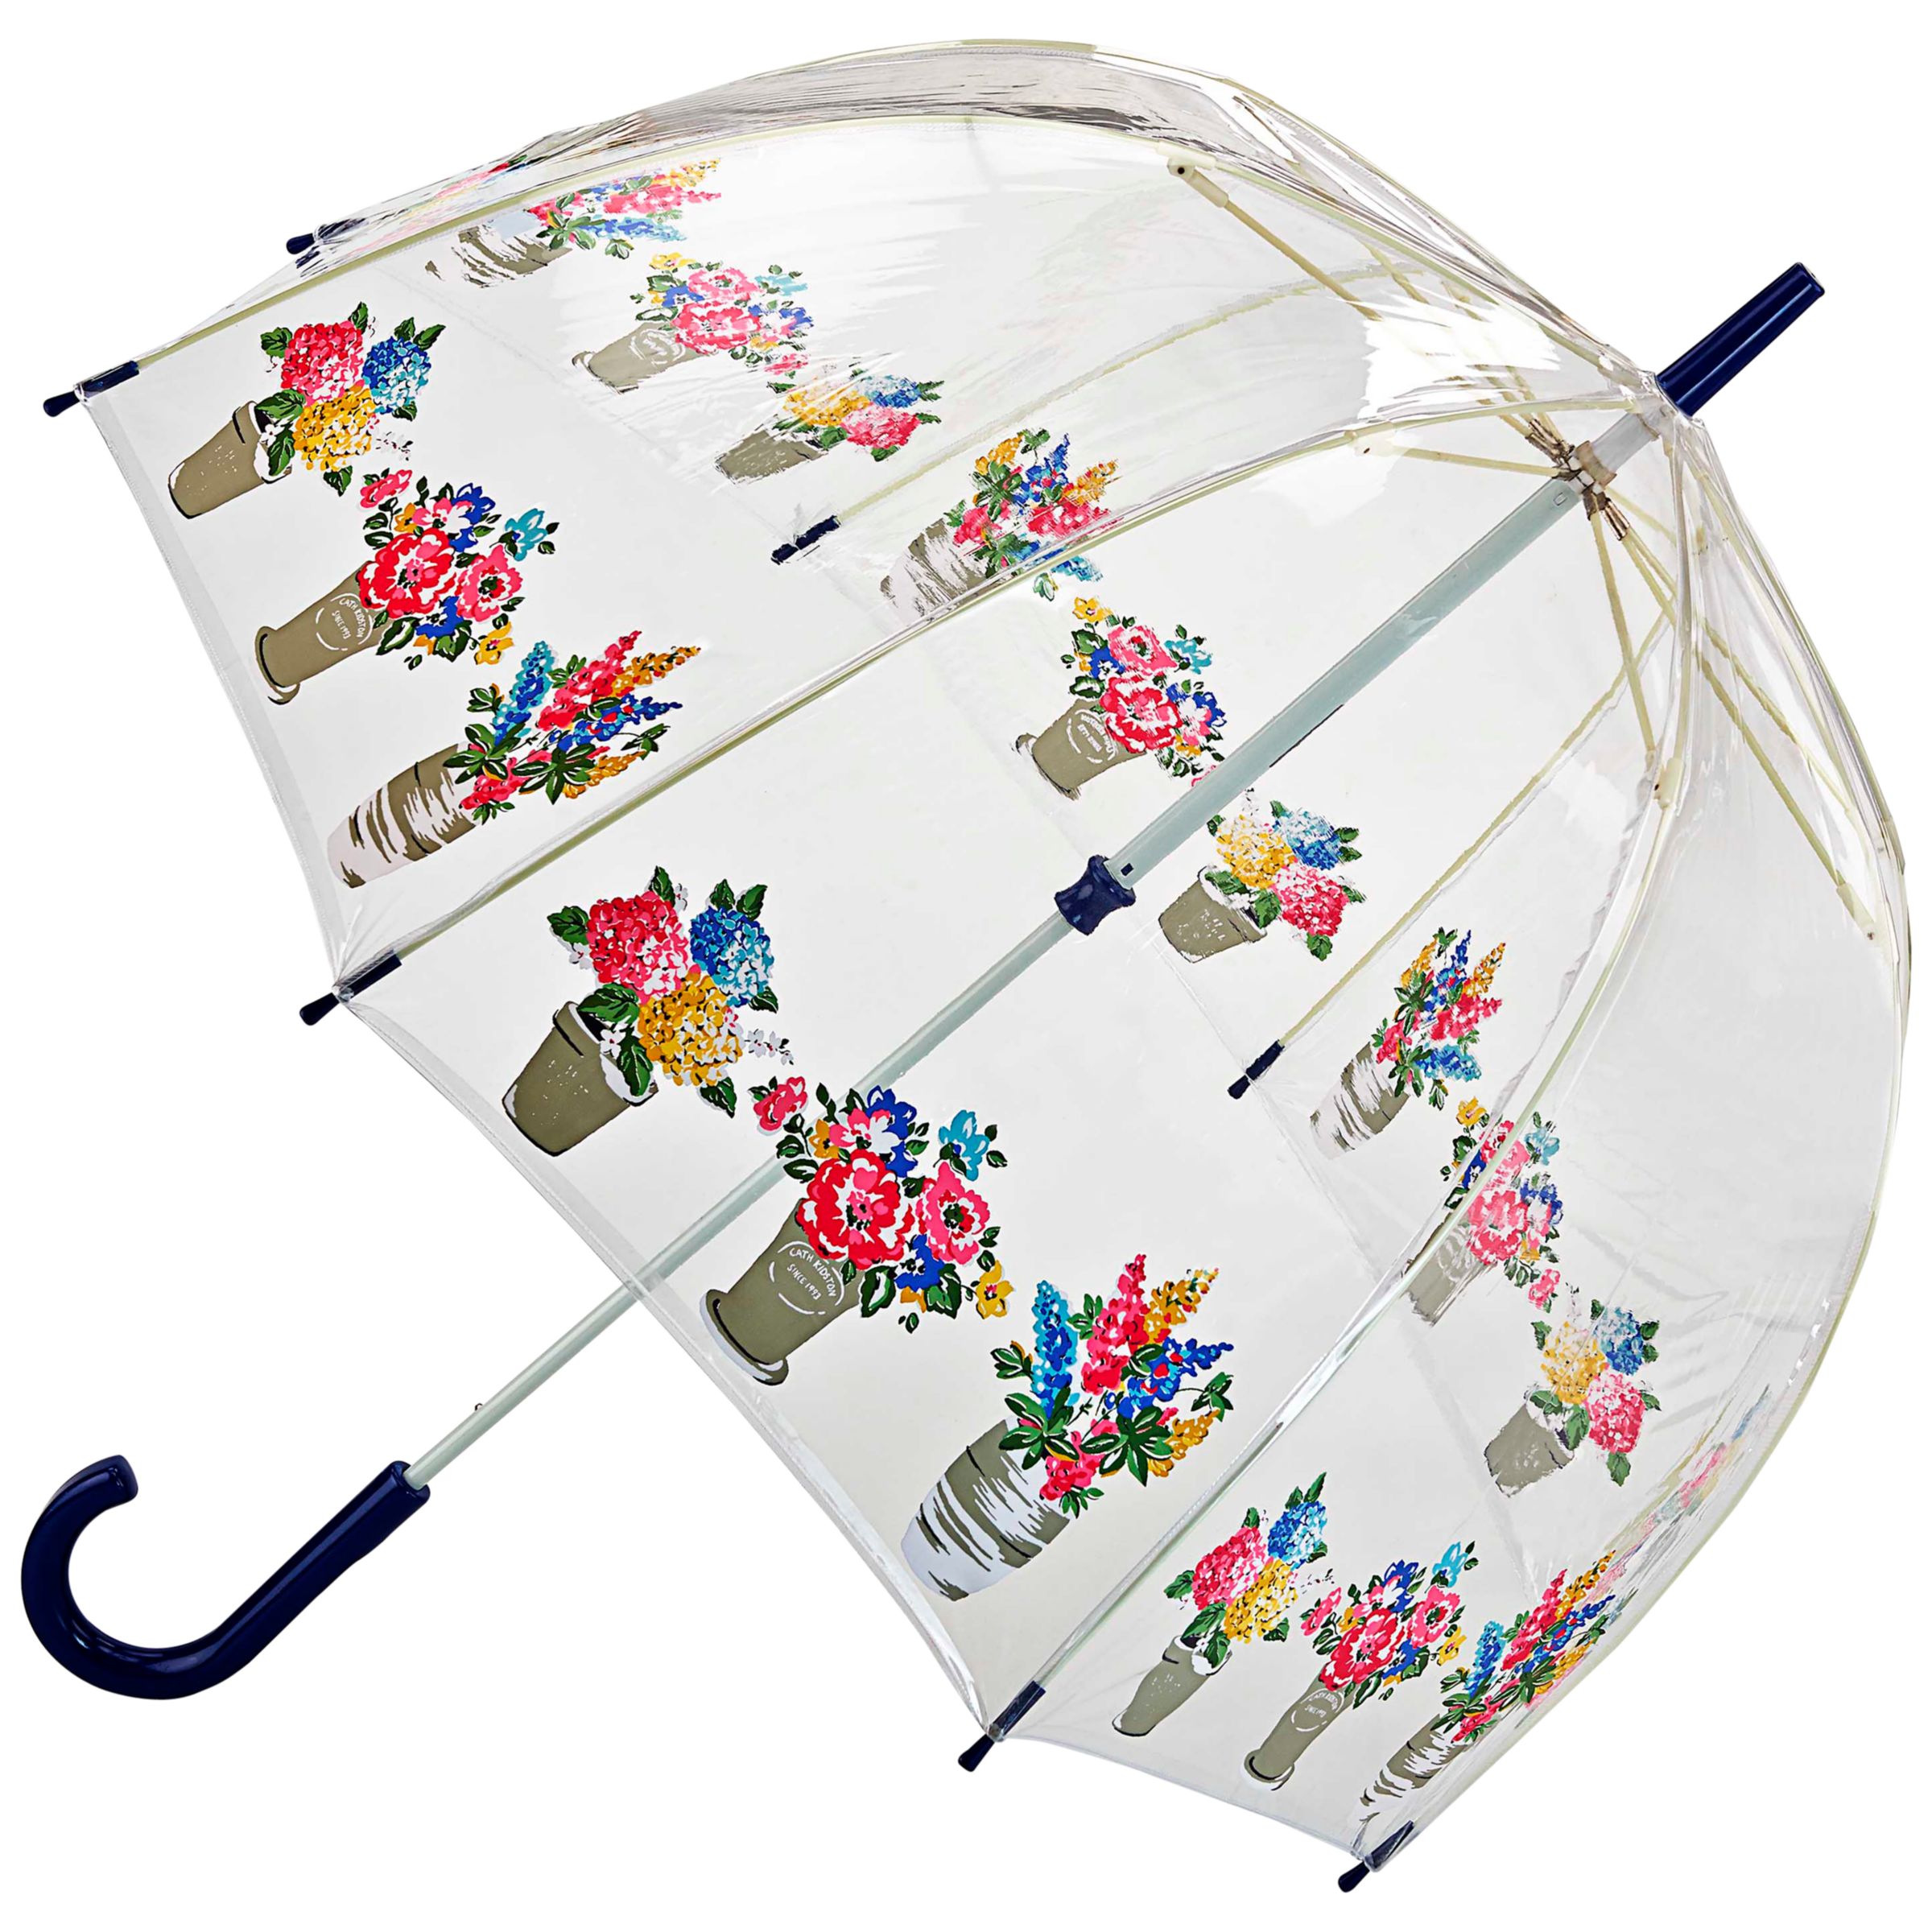 cath kidston umbrellas